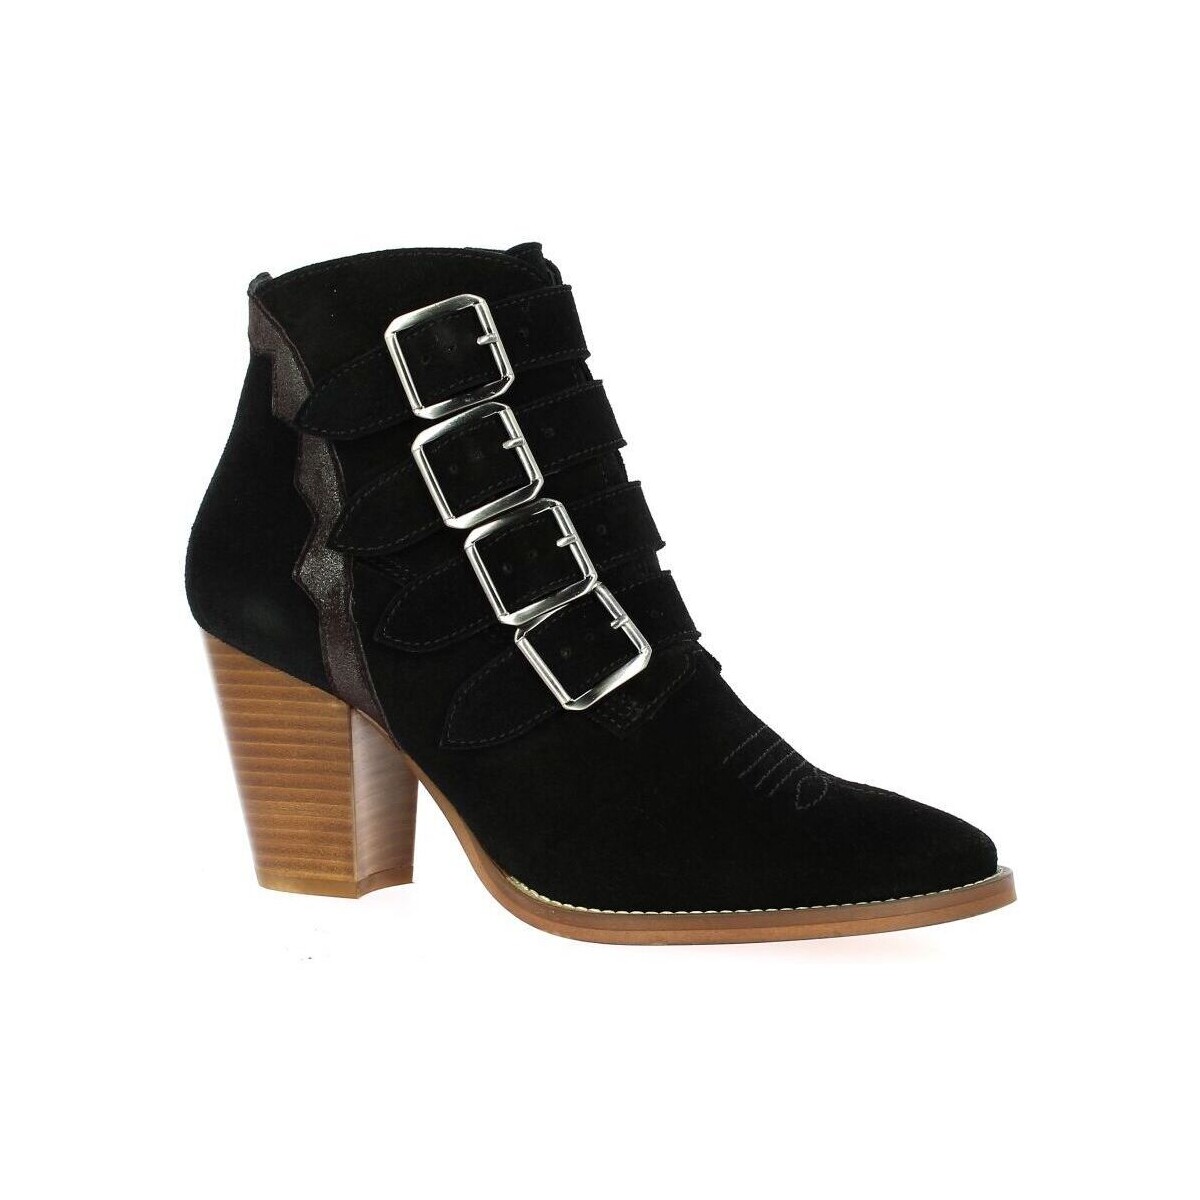 Chaussures Femme Bottes Ambiance Boots cuir velours Noir